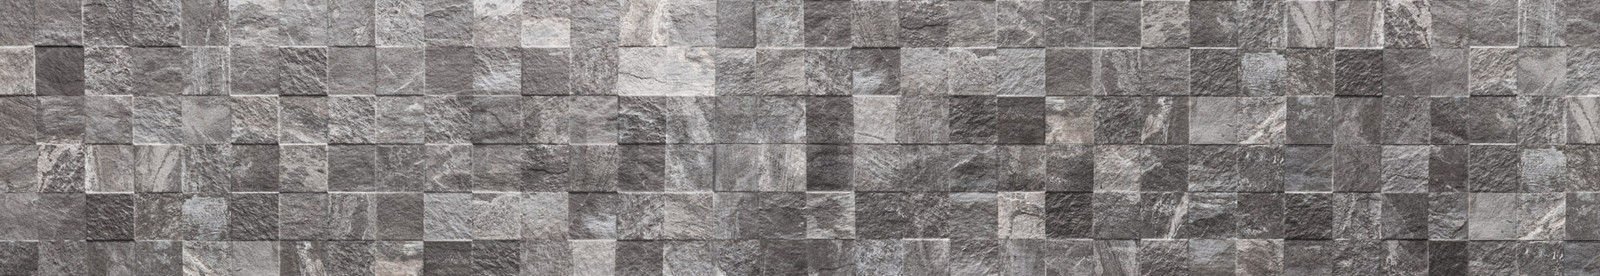 Samoljepljiva periva tapeta za kuhinju - Kamena obloga, 350x60 cm